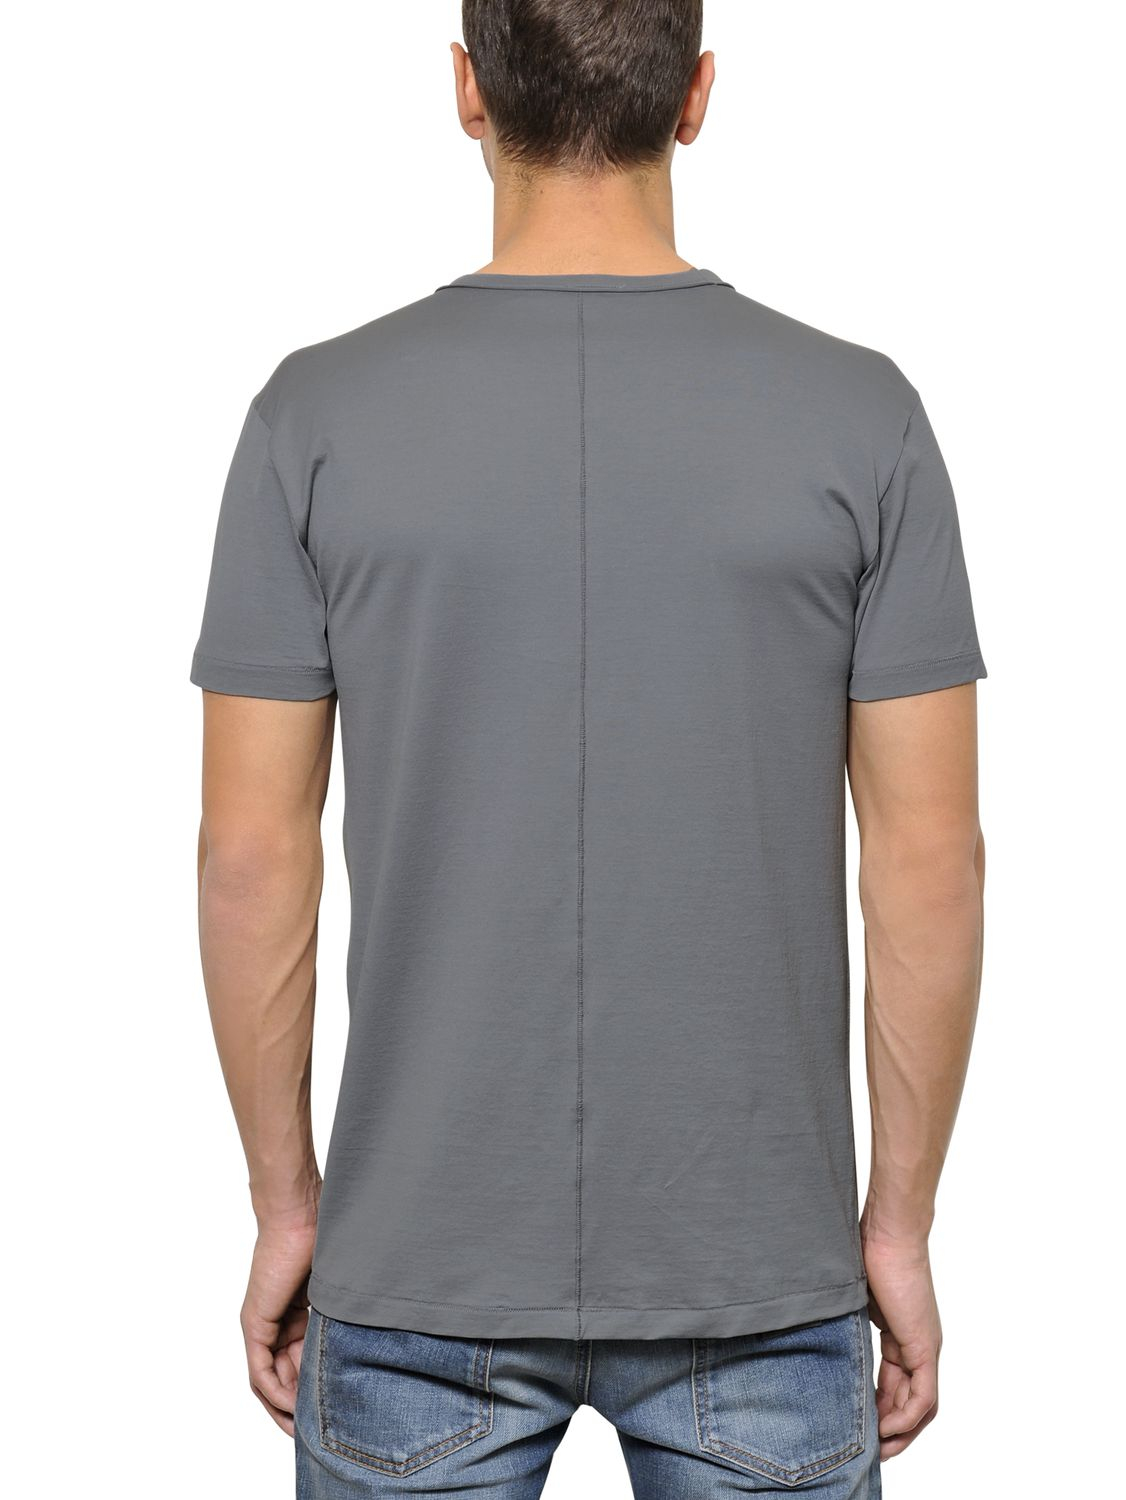 Dolce & gabbana Robert De Niro Cotton Jersey Tshirt in Gray for Men | Lyst